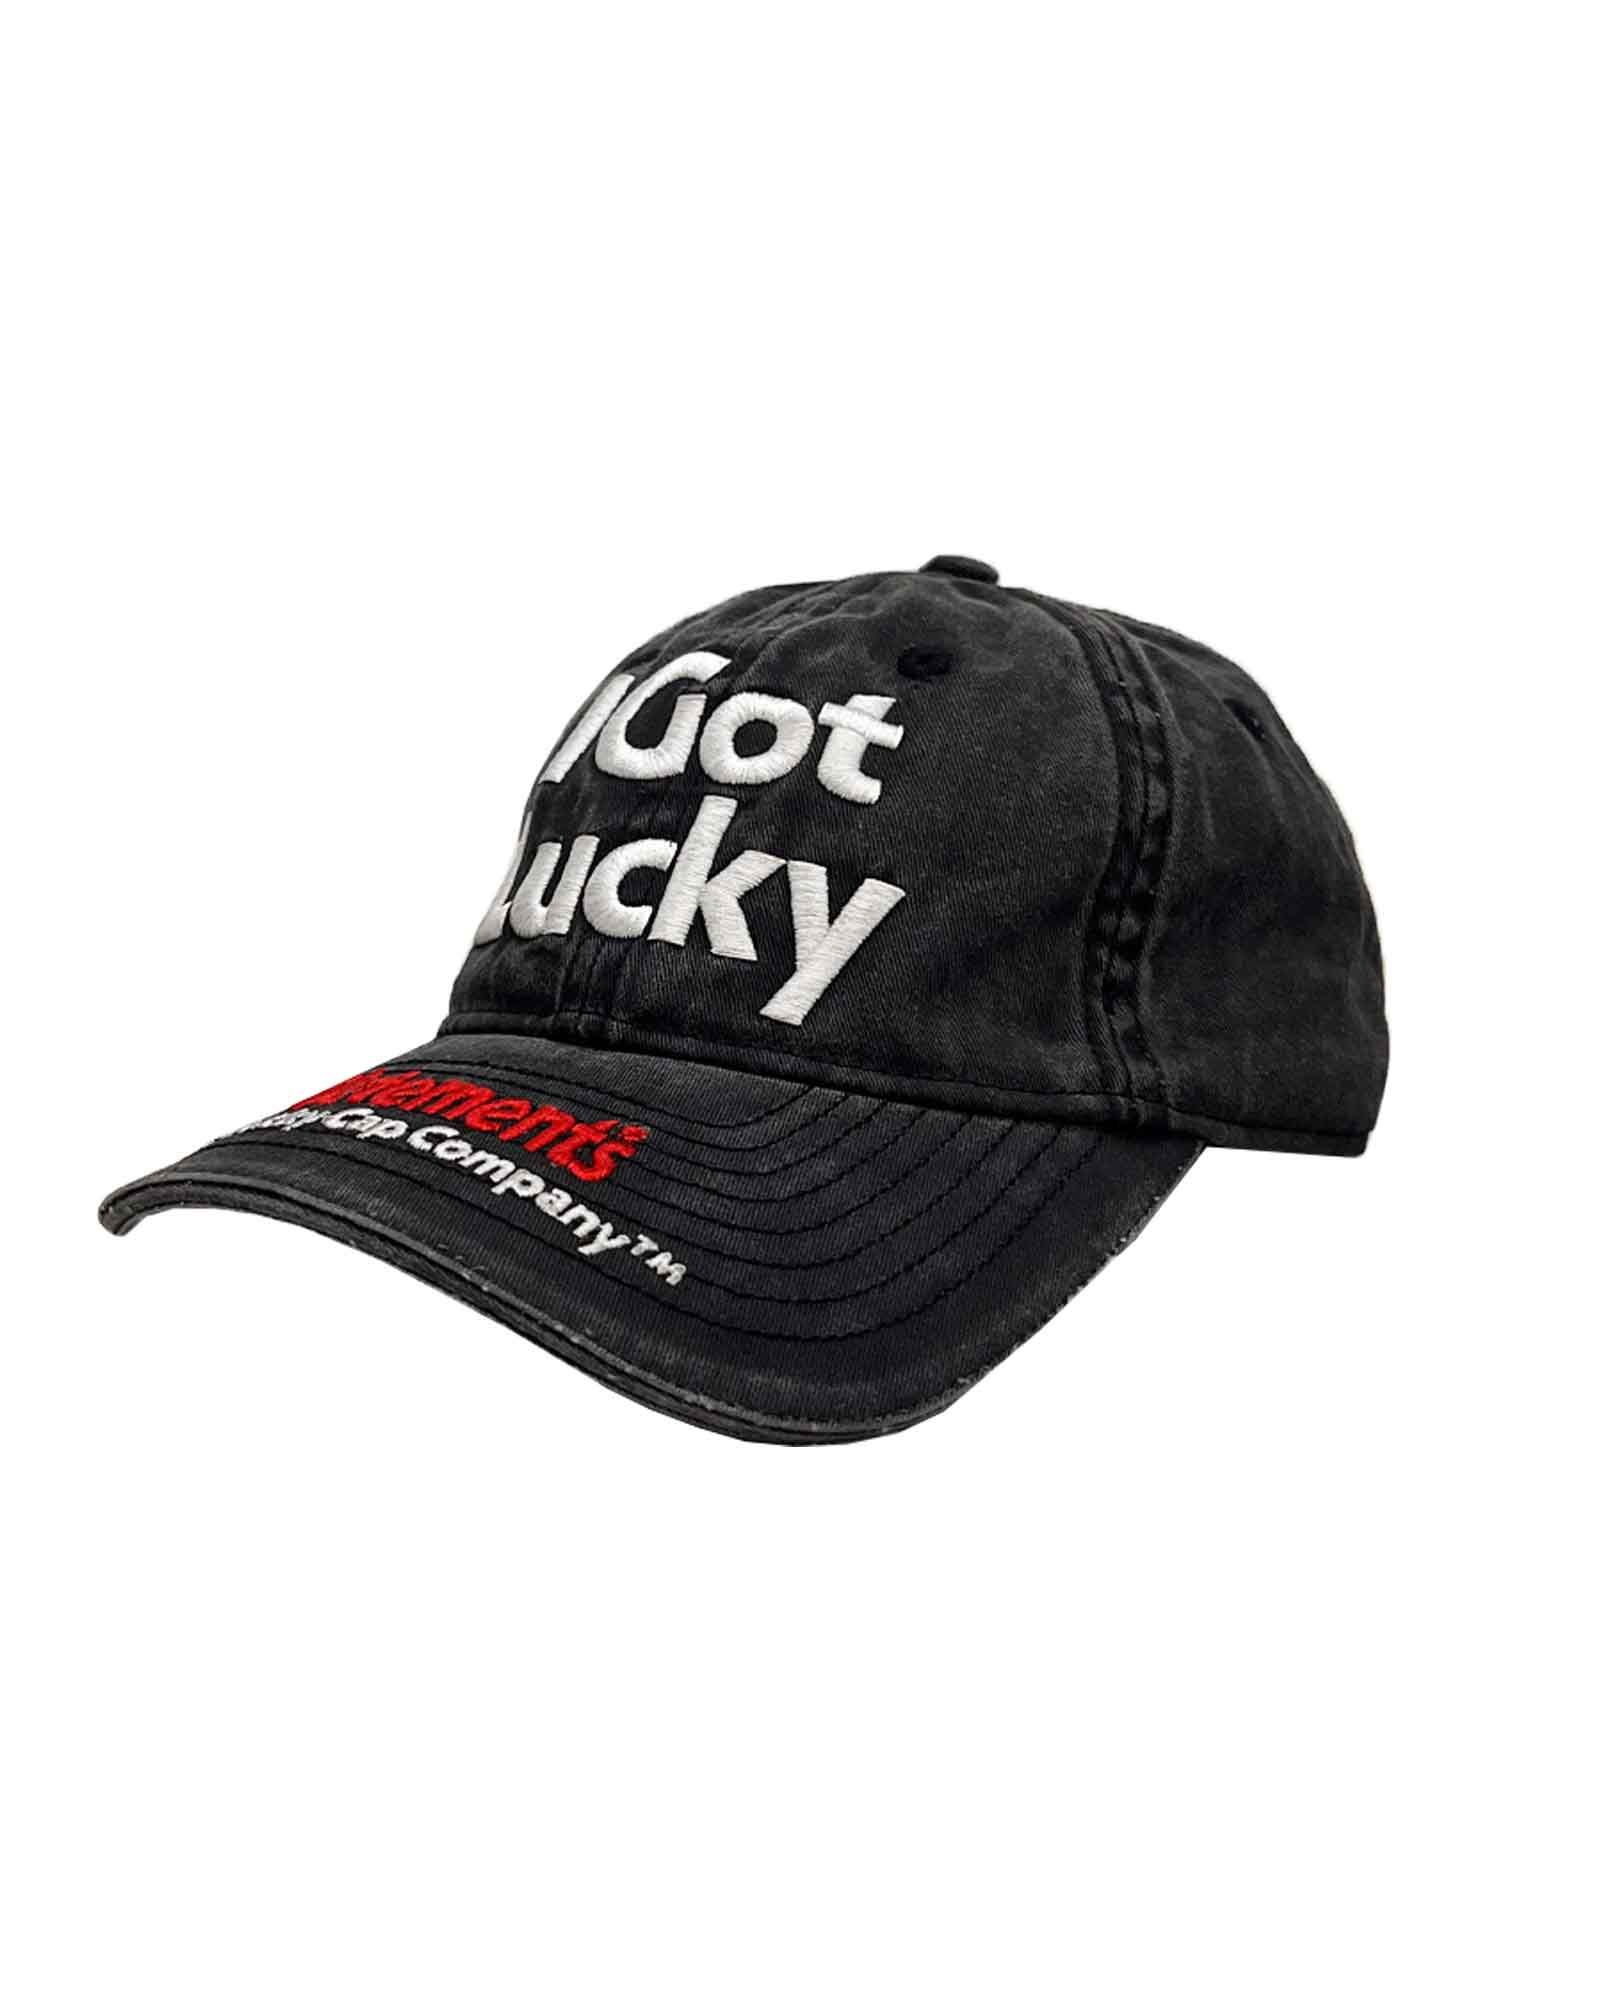 VETEMENTS - Lucky cap | Detail